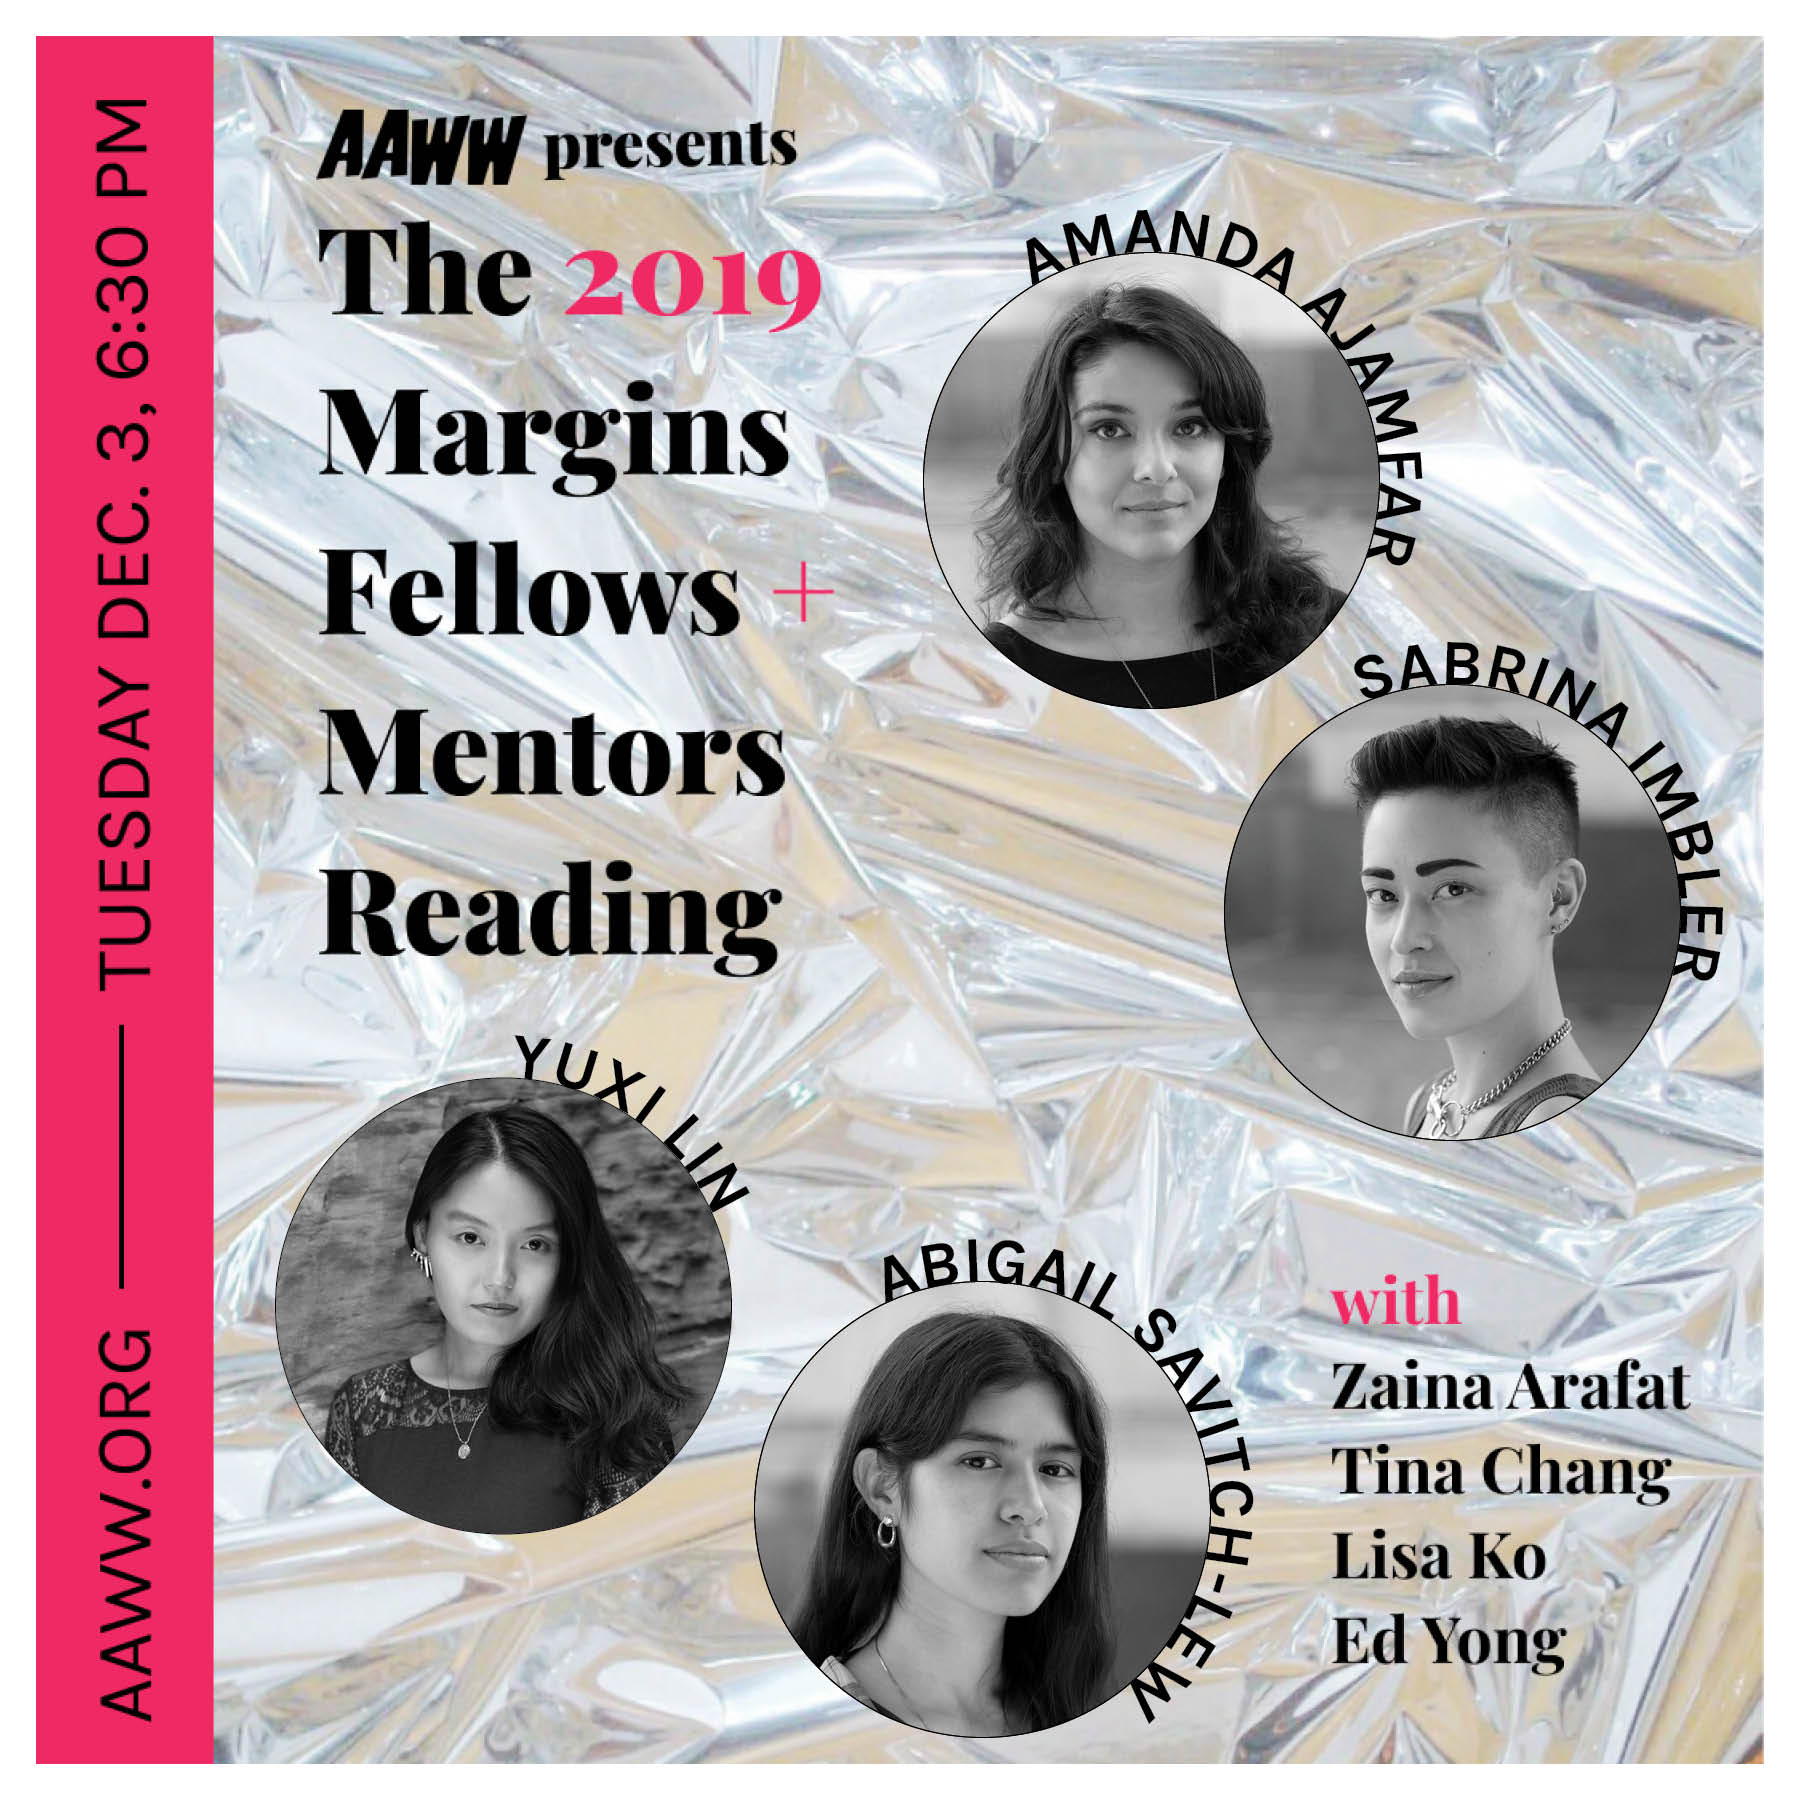 2019 Margins Fellows + Mentors Reading